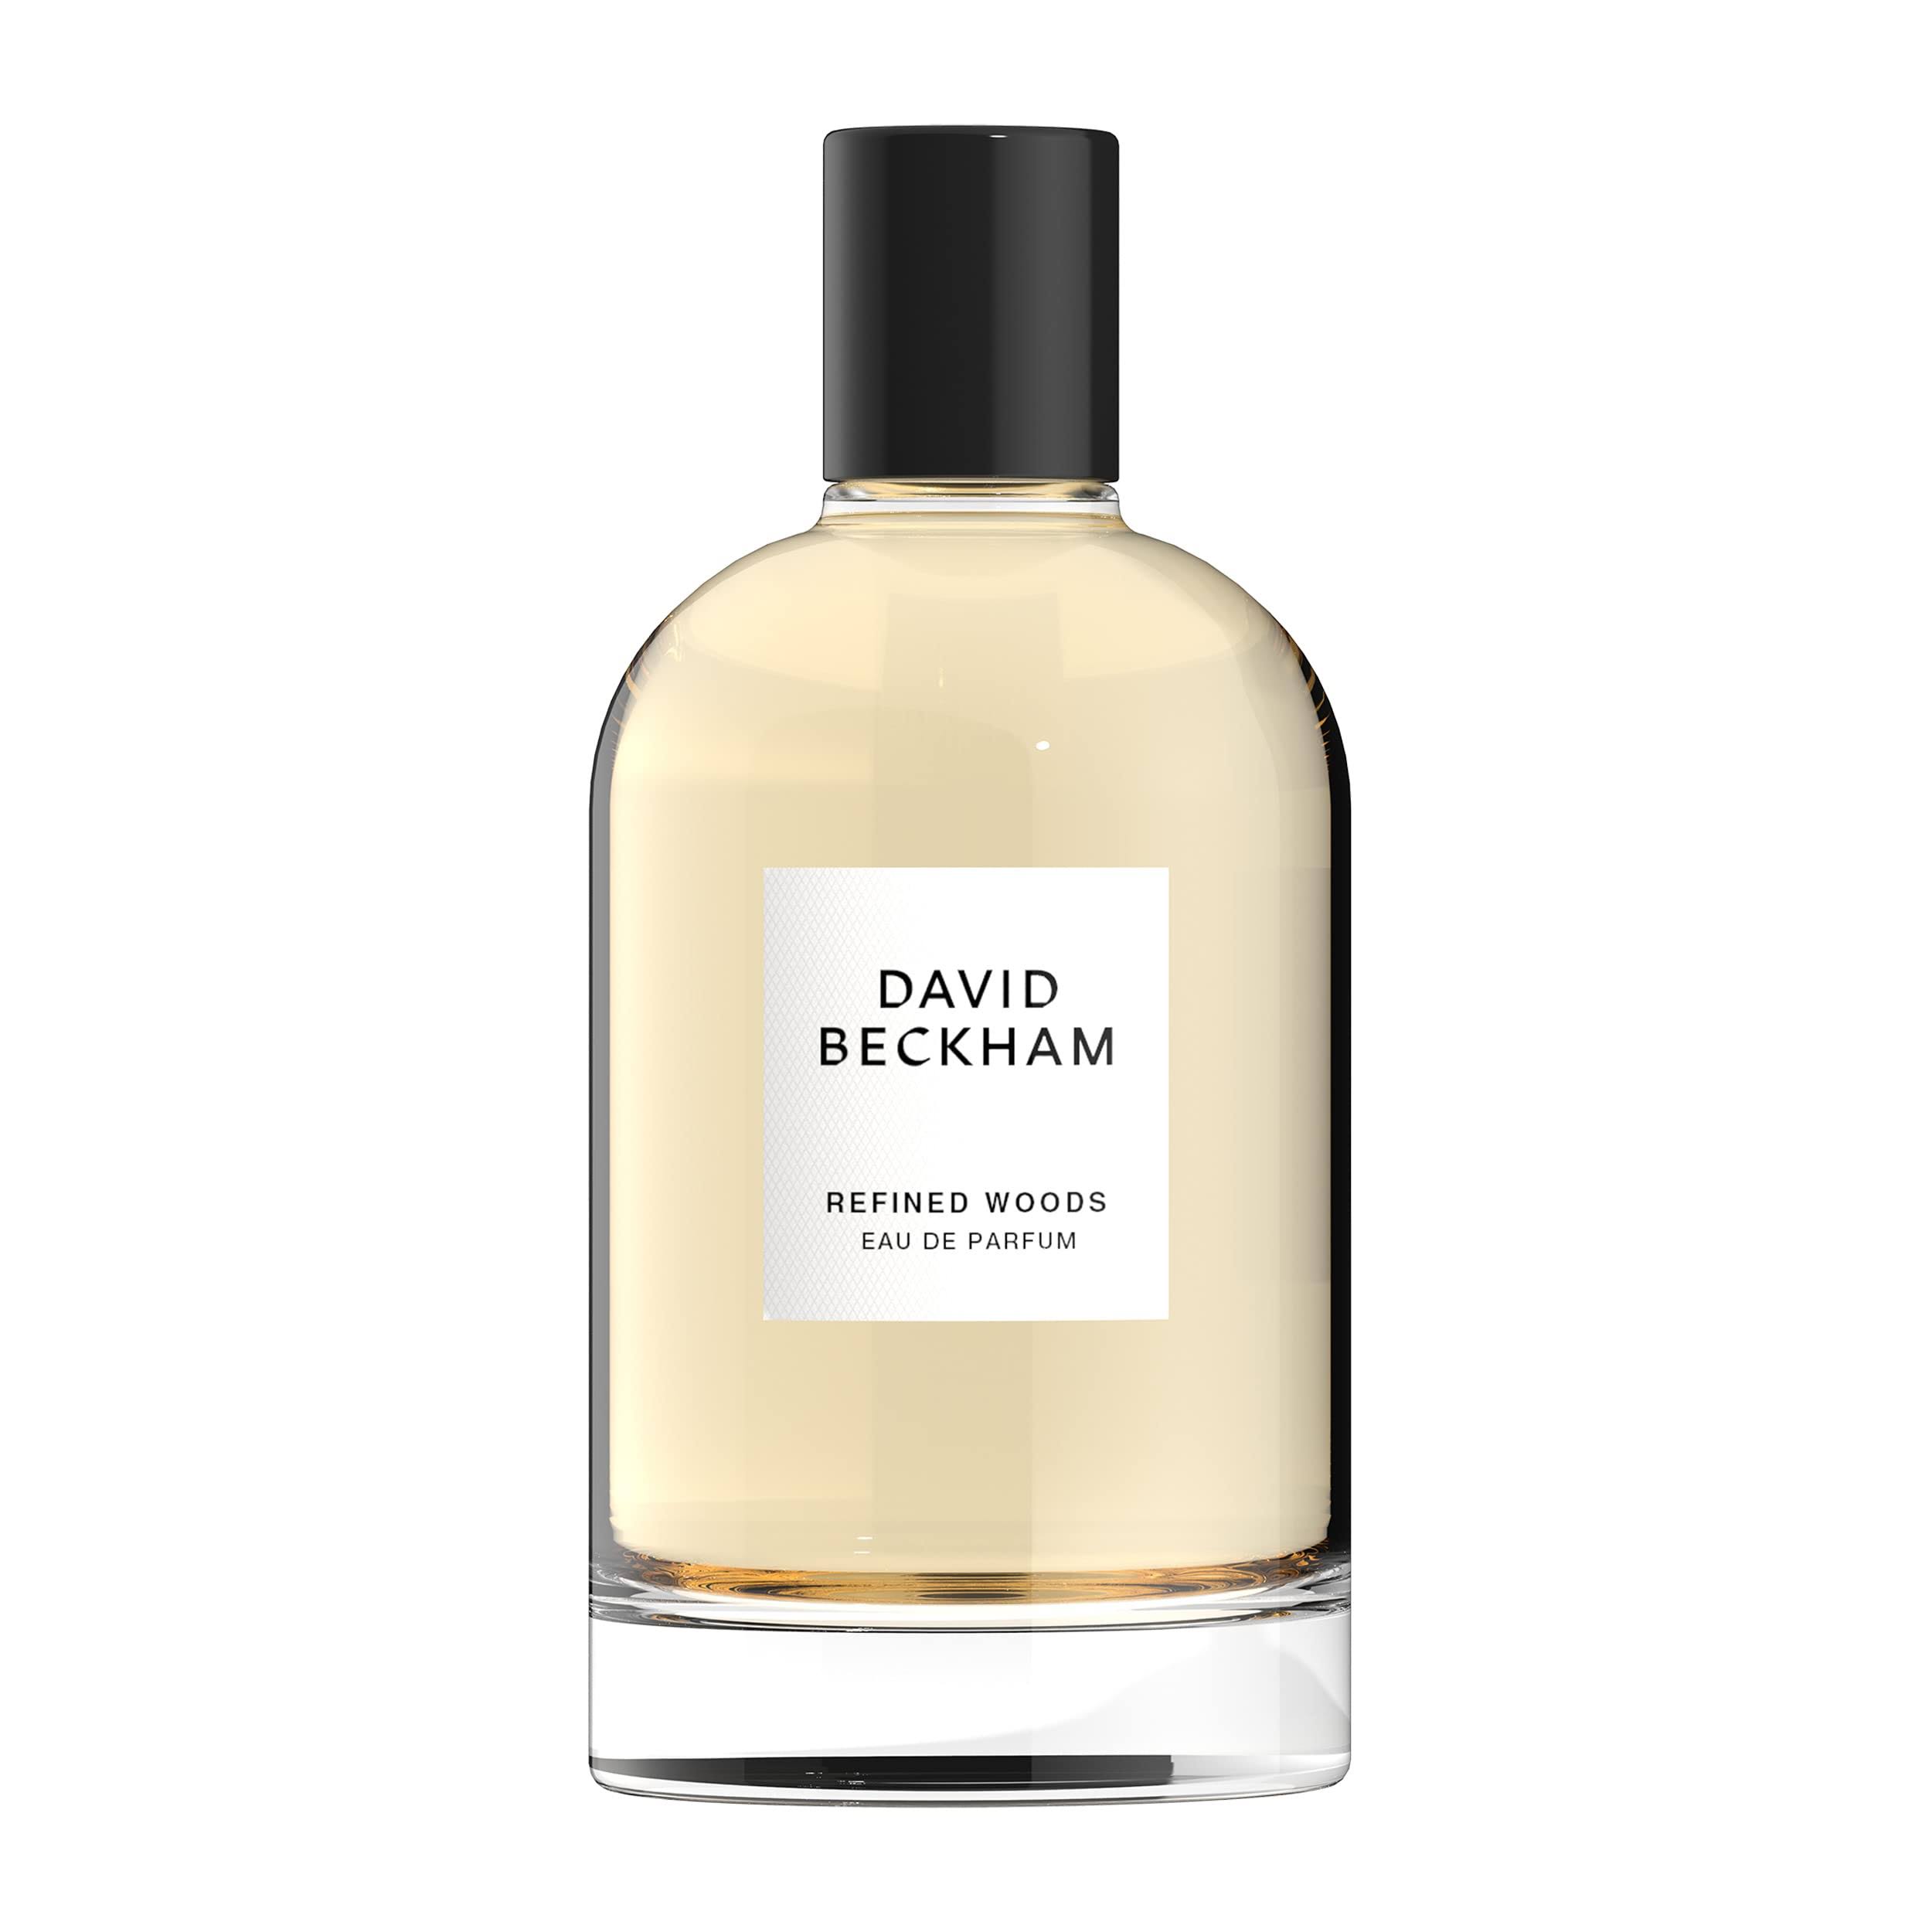 David Beckham Collection Refined Woods Eau de Parfum 100ml